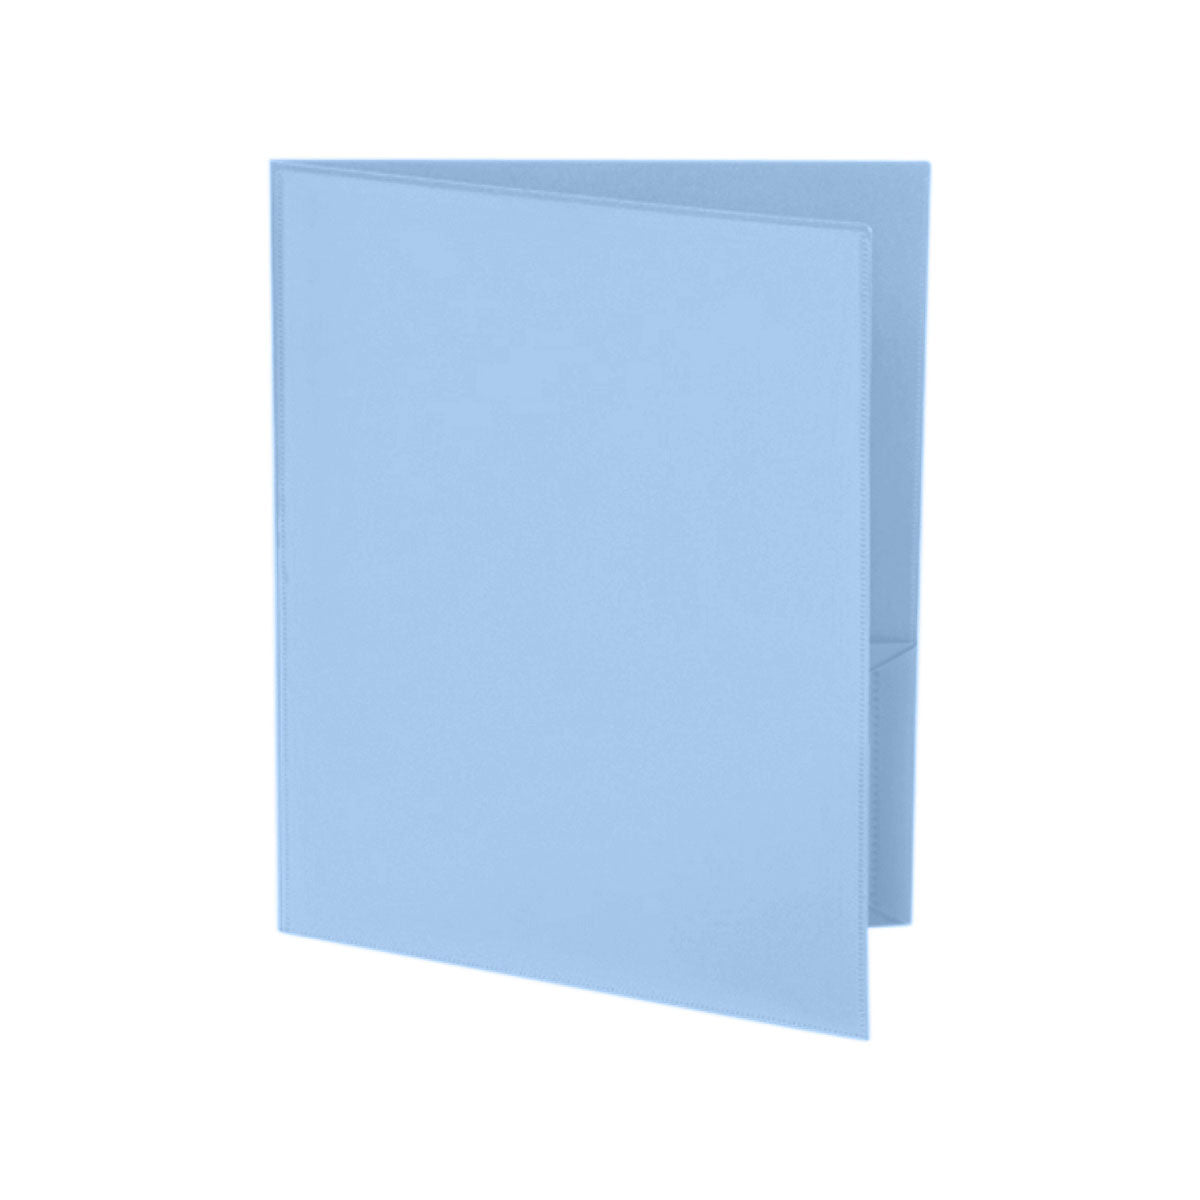 Two Pocket Folder With Clear Outside Pockets | Ultra Folders